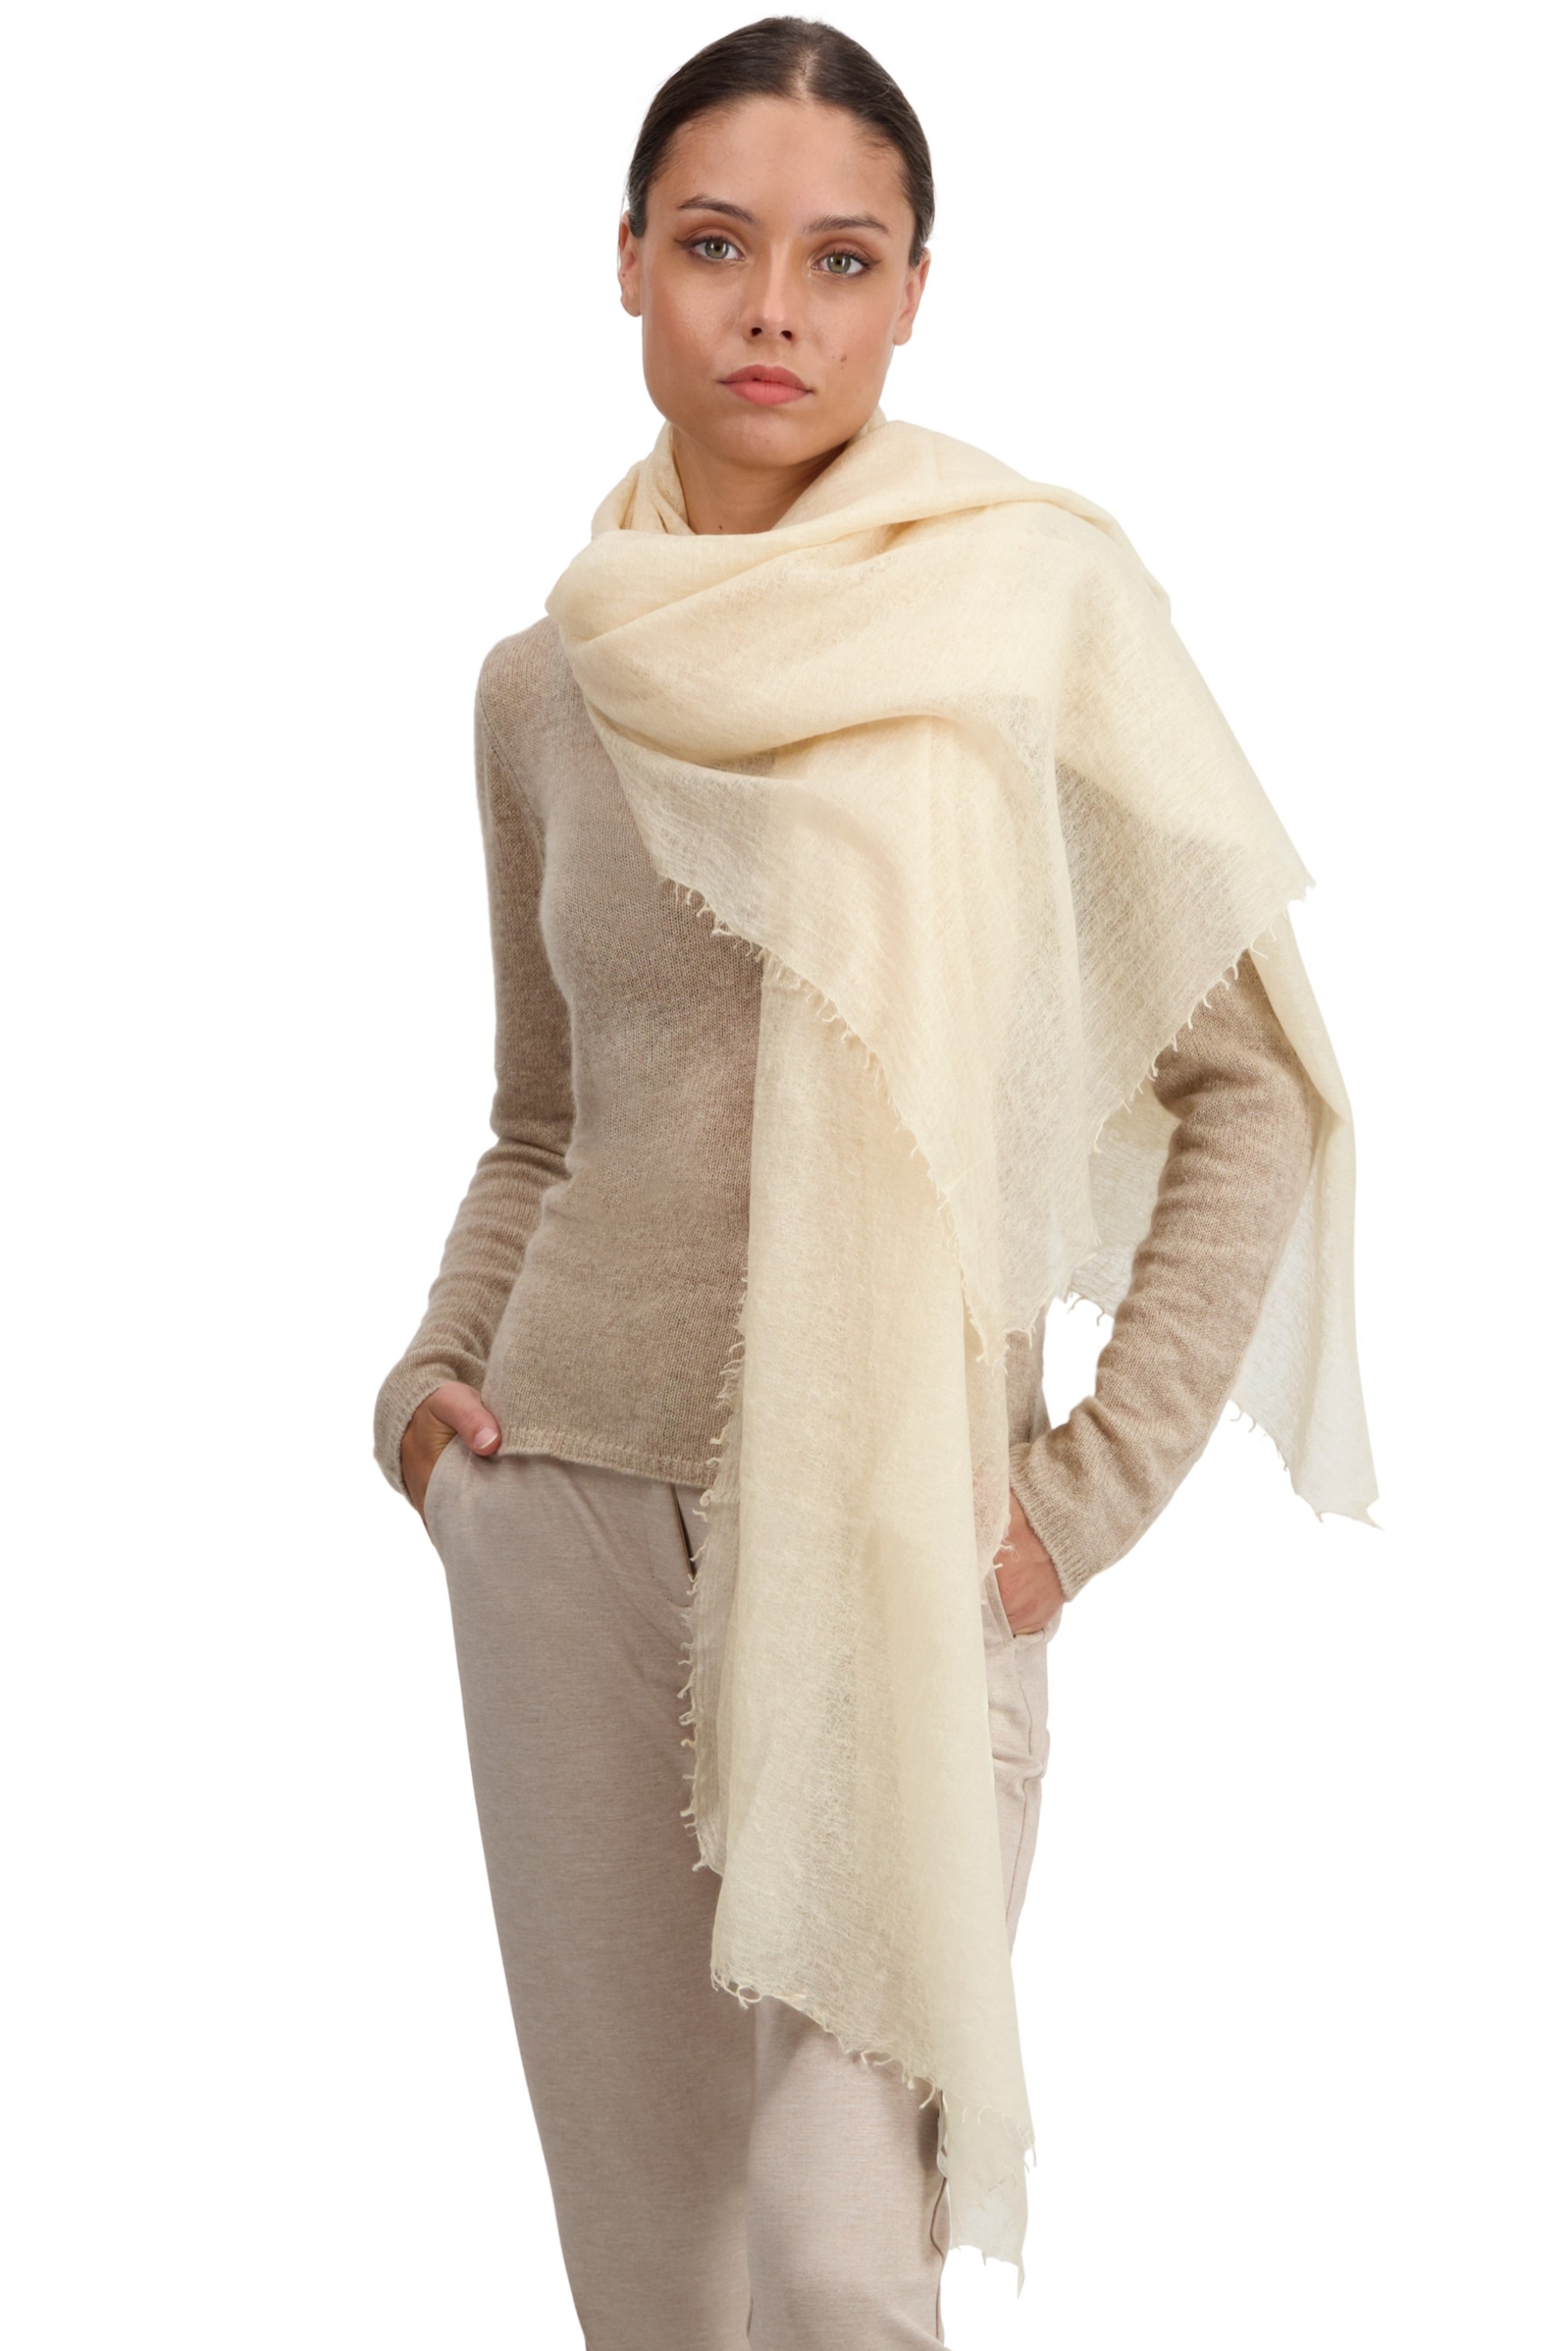 Cashmere ladies scarves mufflers tonka white smocke 200 cm x 120 cm